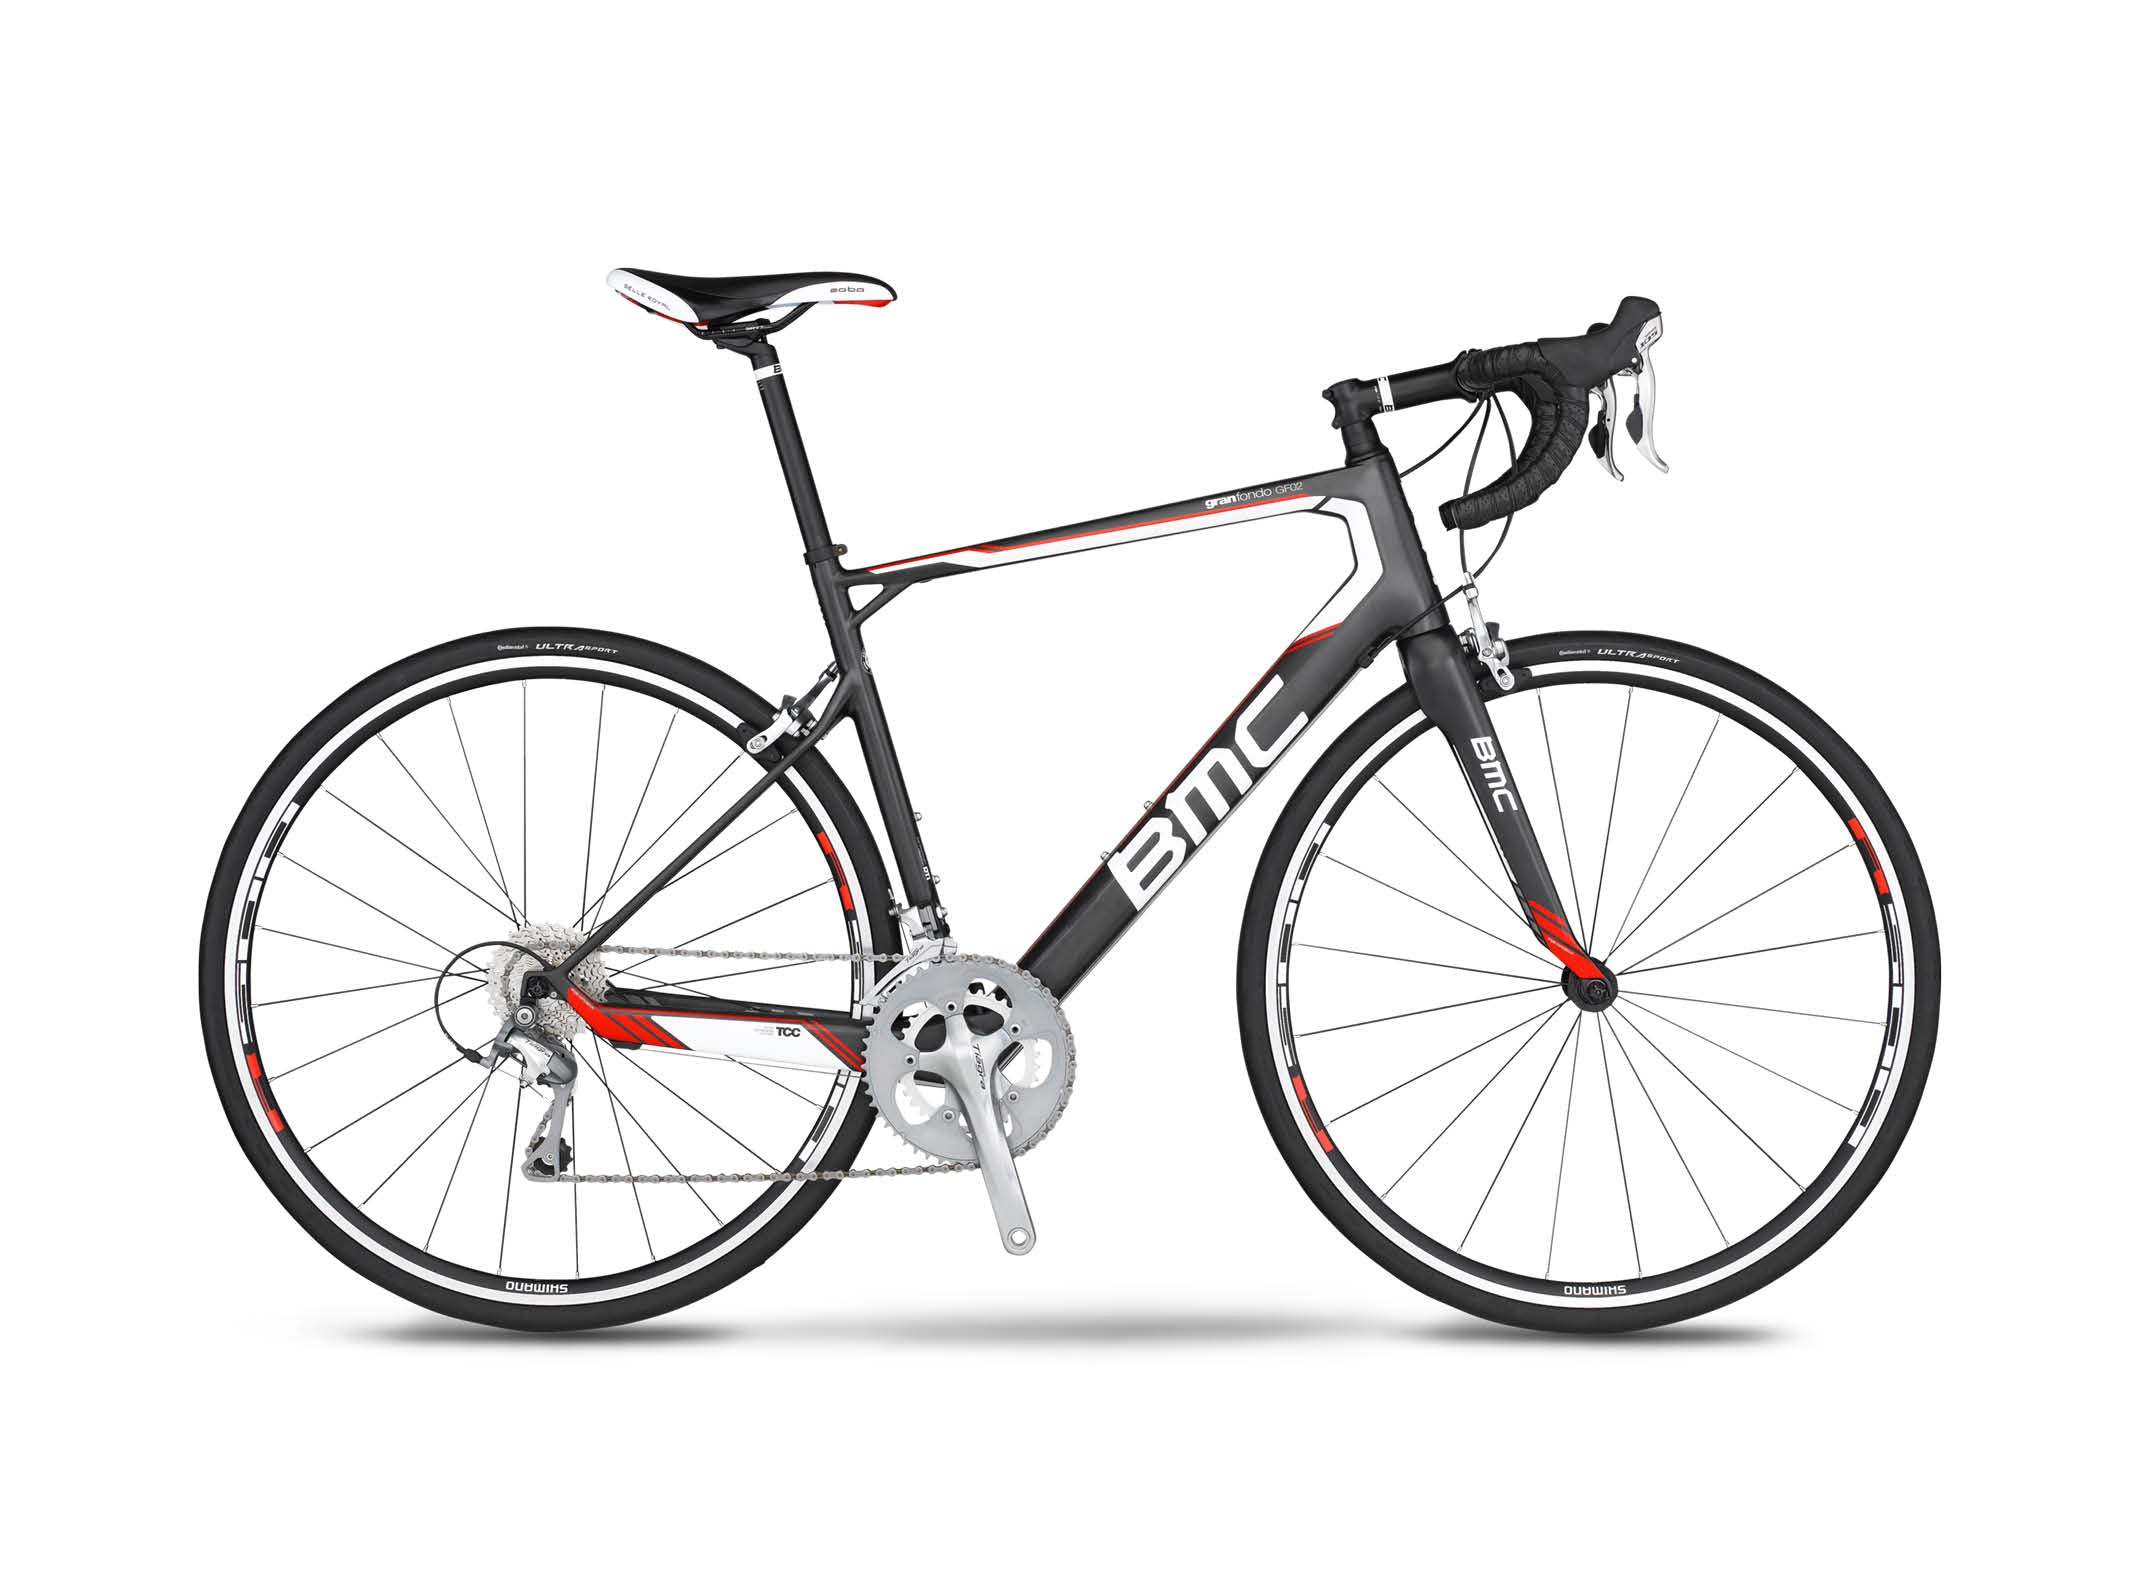 Granfondo GF02 Tiagra Compact | BMC | bikes | Road, Road | Endurance